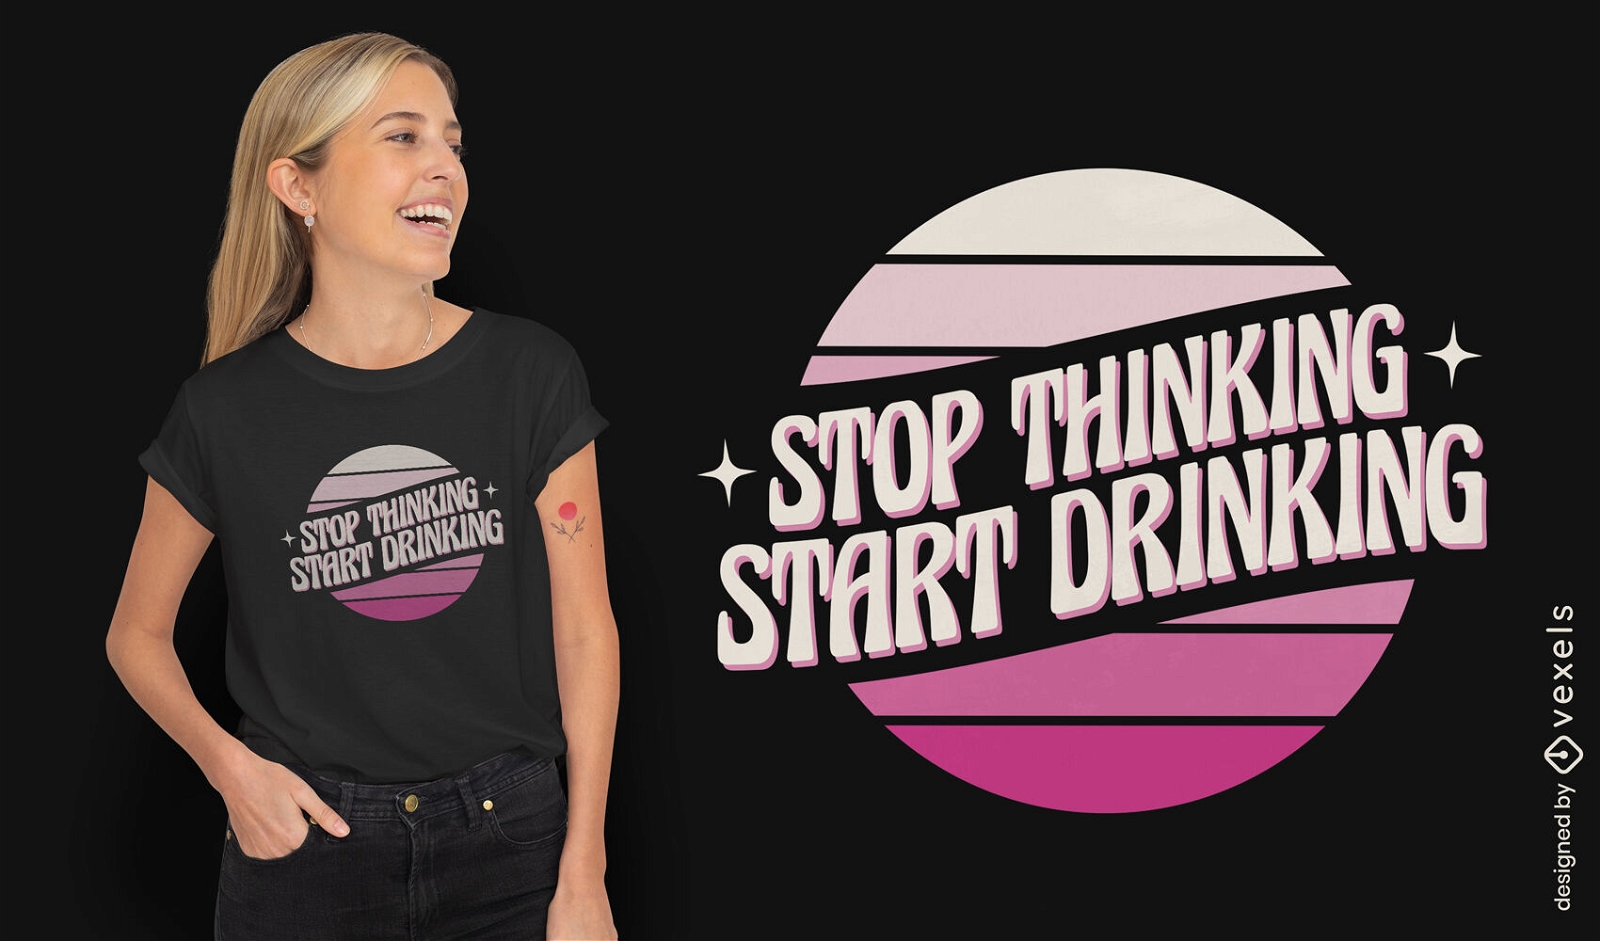 Stop thinking start drinking t-shirt design